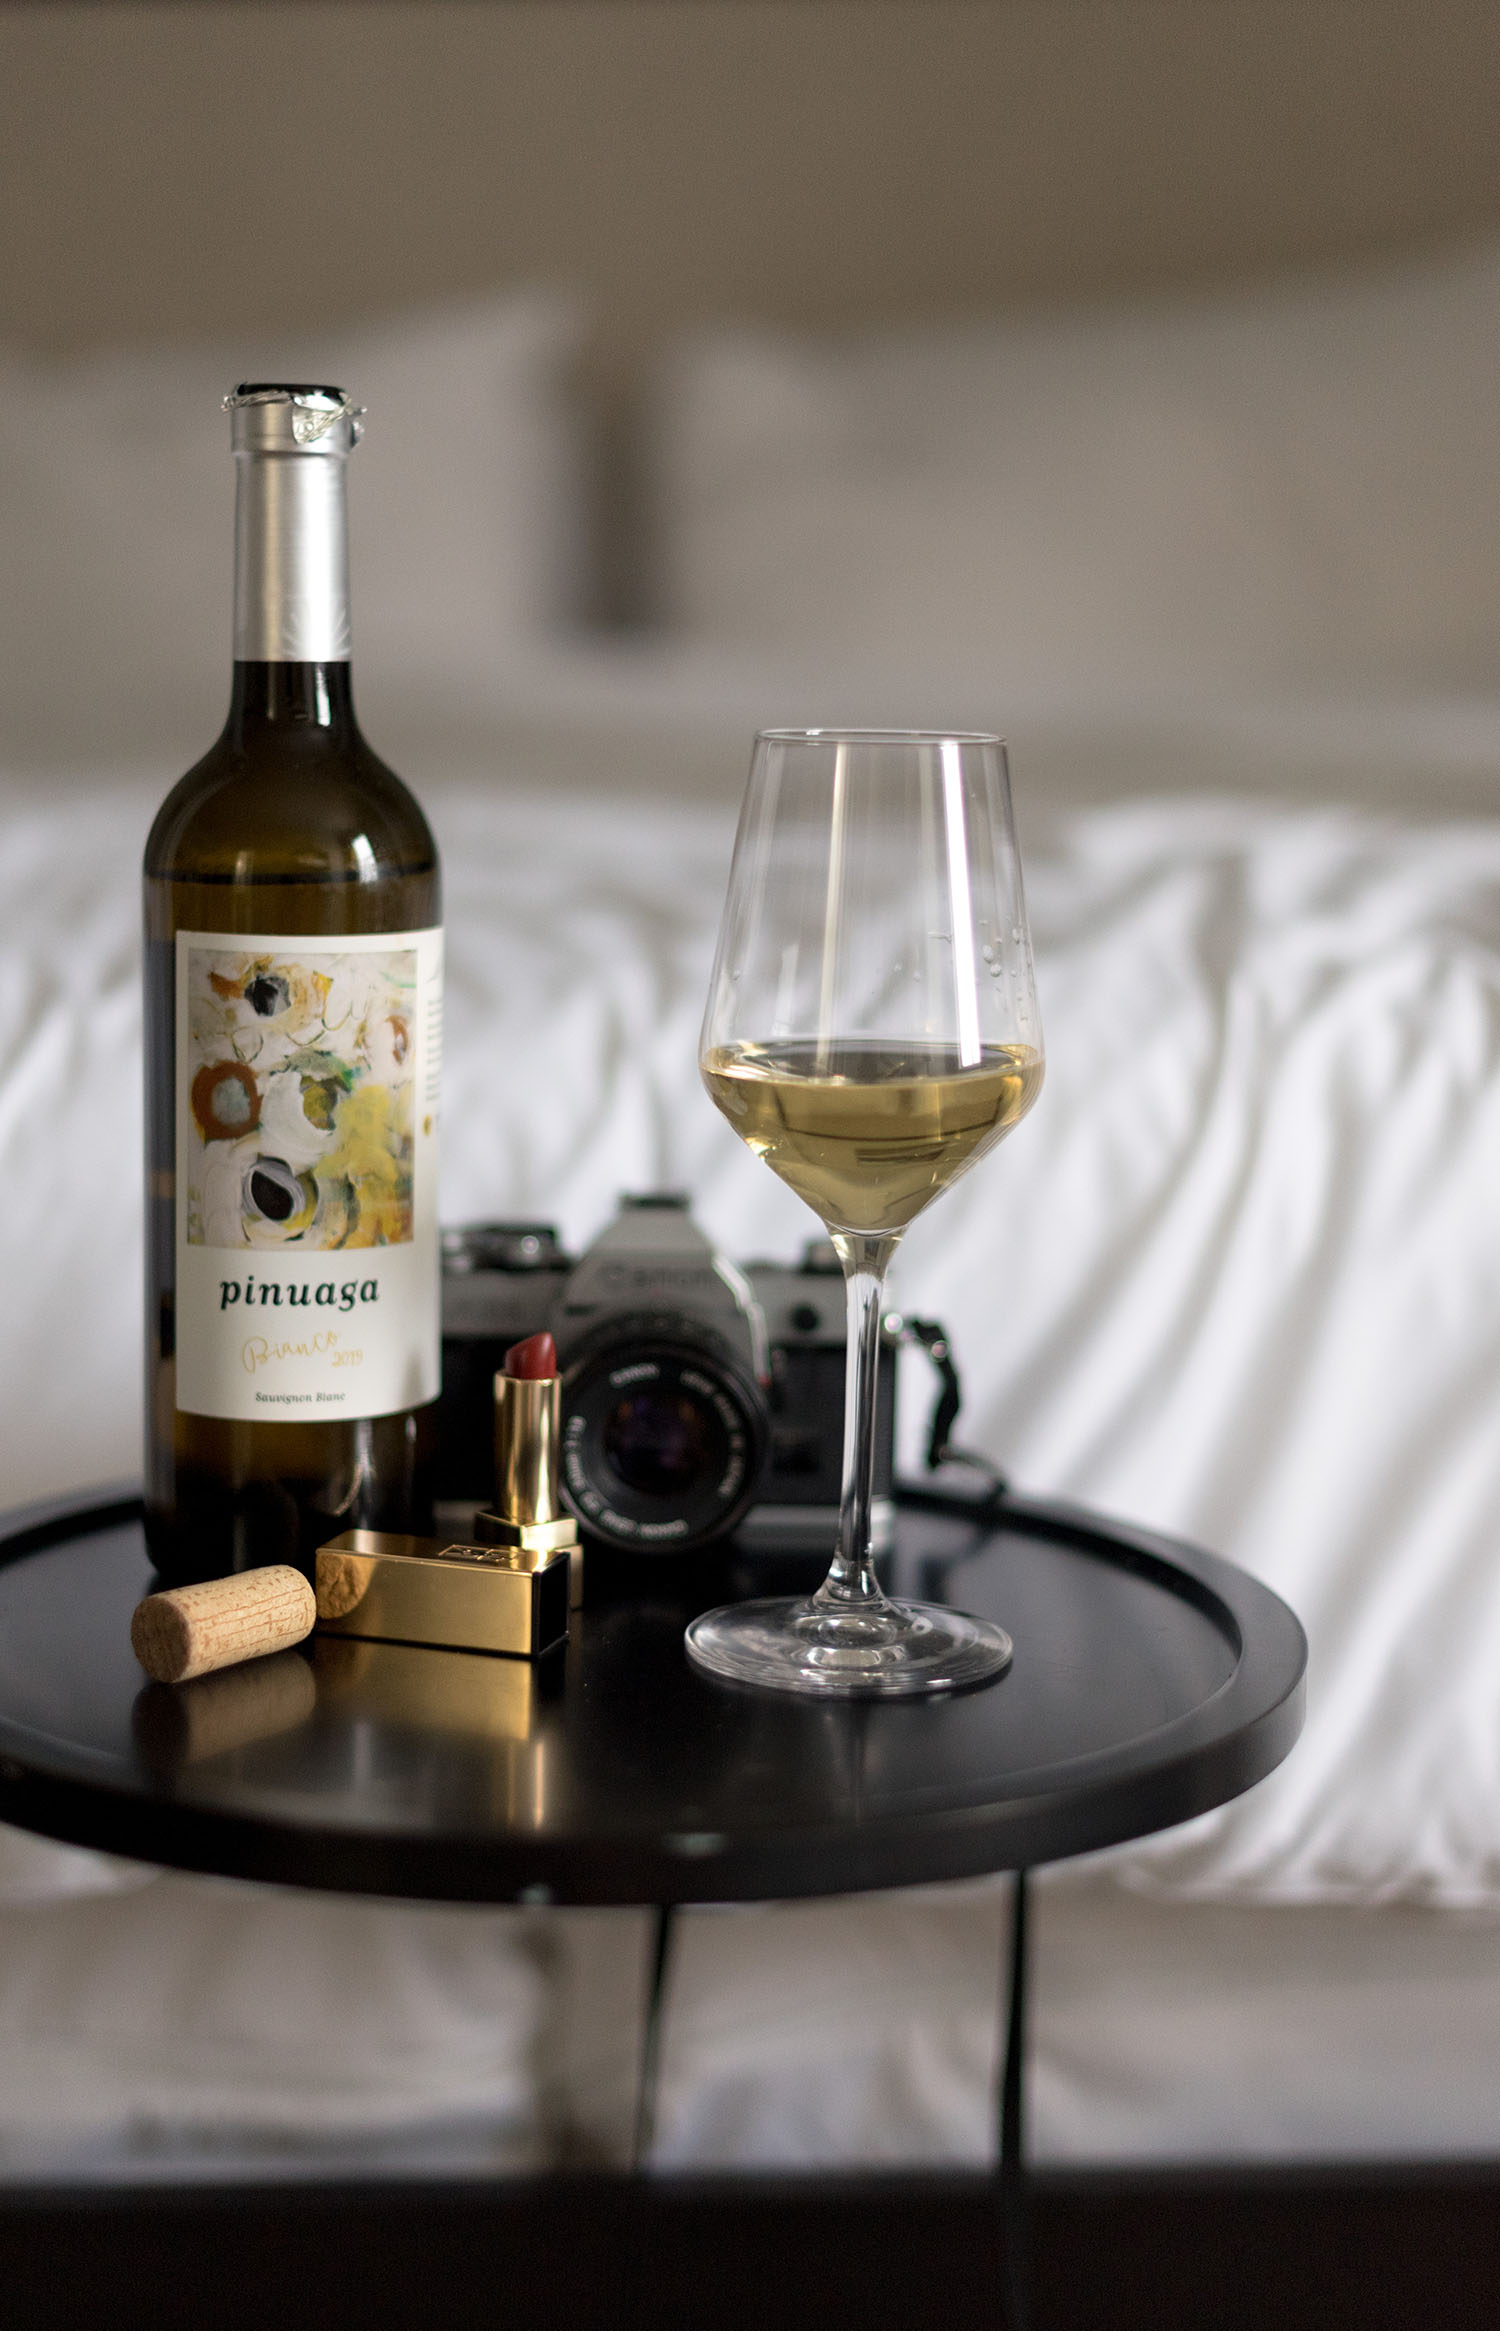 Coco & Vera - Pinuaga wine, Yves Saint-Laurent lipstick, Canon camera